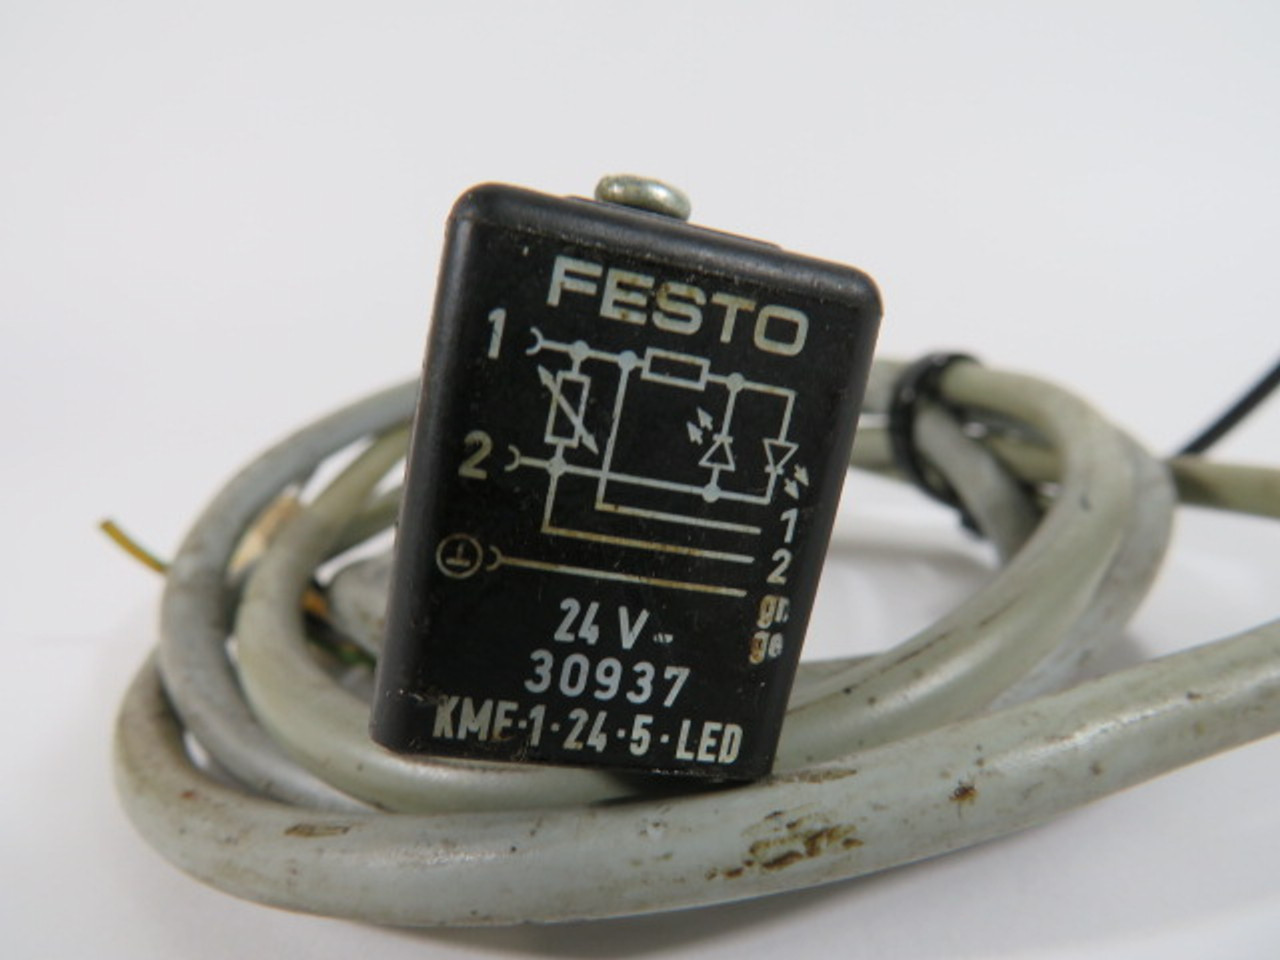 Festo 30937 KMF-1-24-5-LED Plug Socket W/ Cable 24V USED